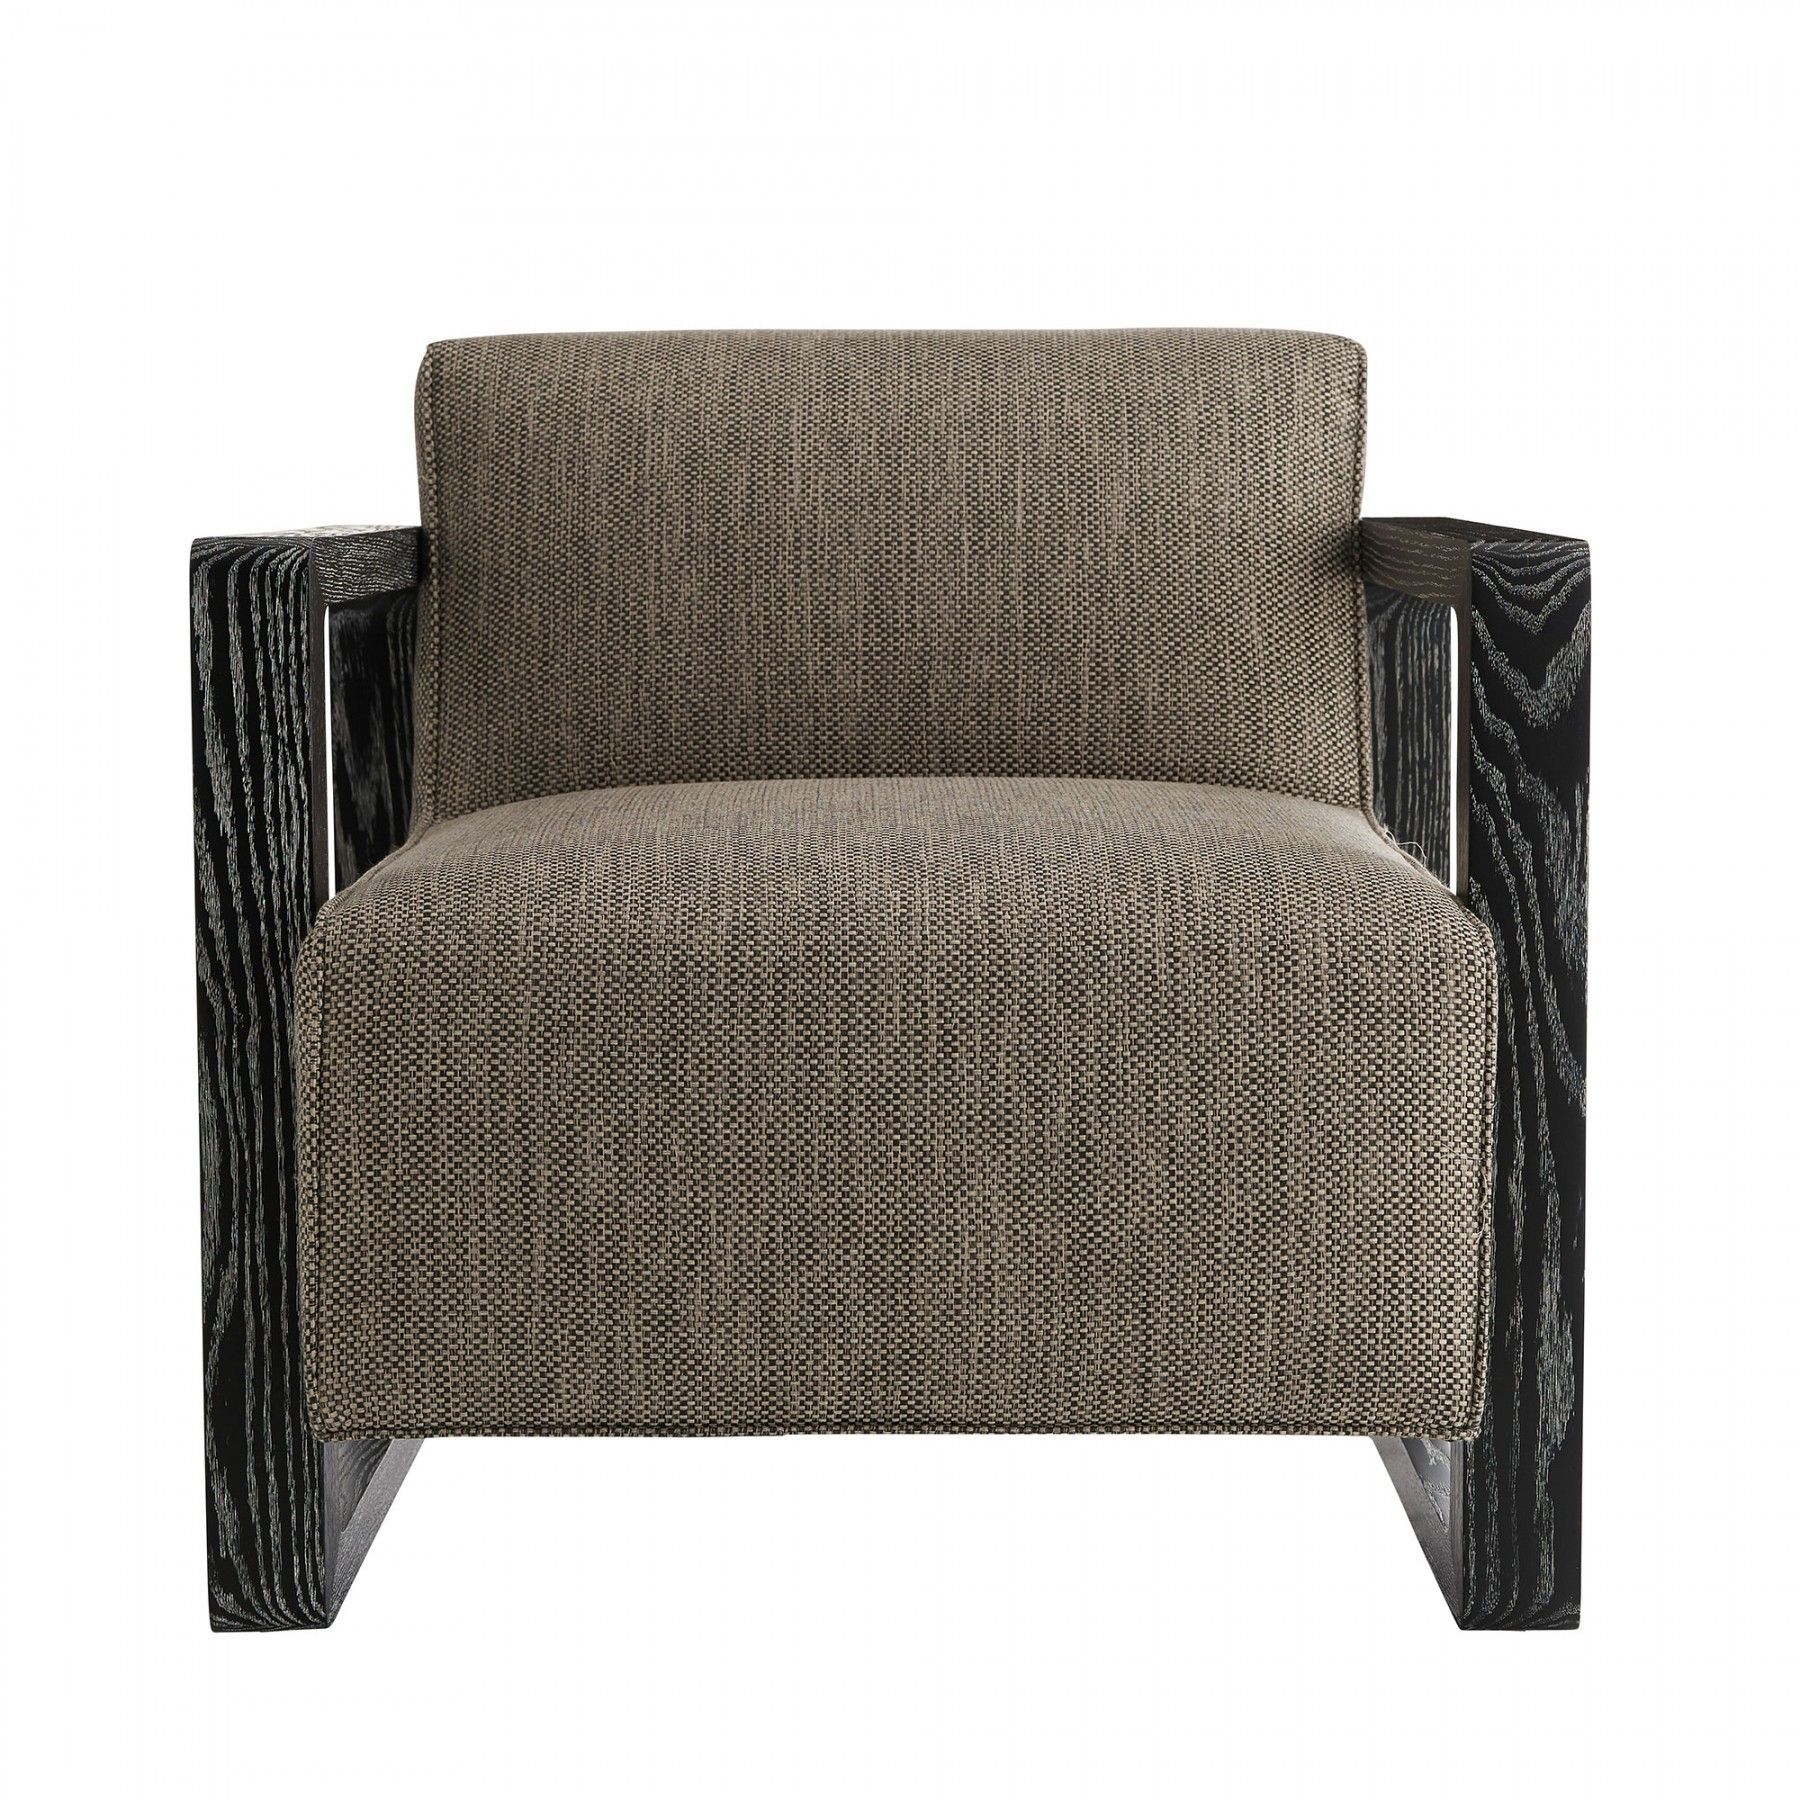 Duran Chair Pebble Tweed Black Cerused | Arteriors With Regard To Antonio Light Gray Leather Sofas (View 6 of 15)